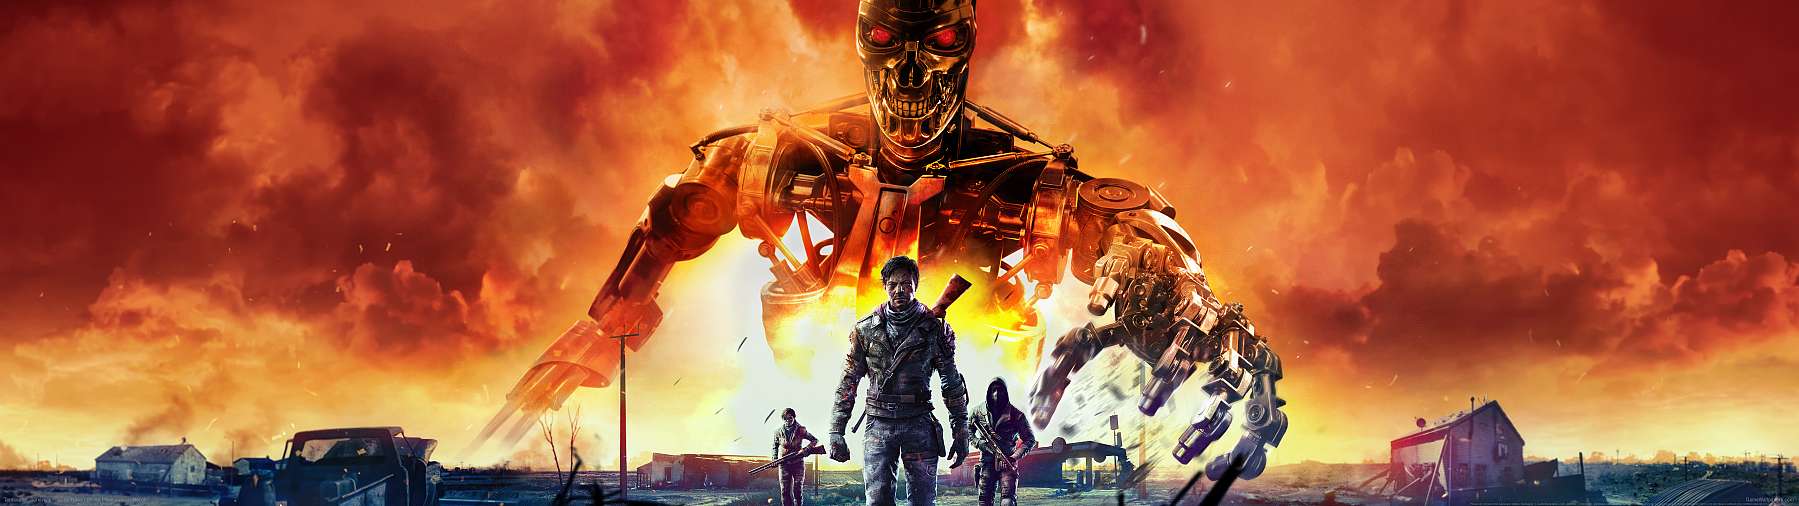 Terminator: Survivors superwide wallpaper or background 01